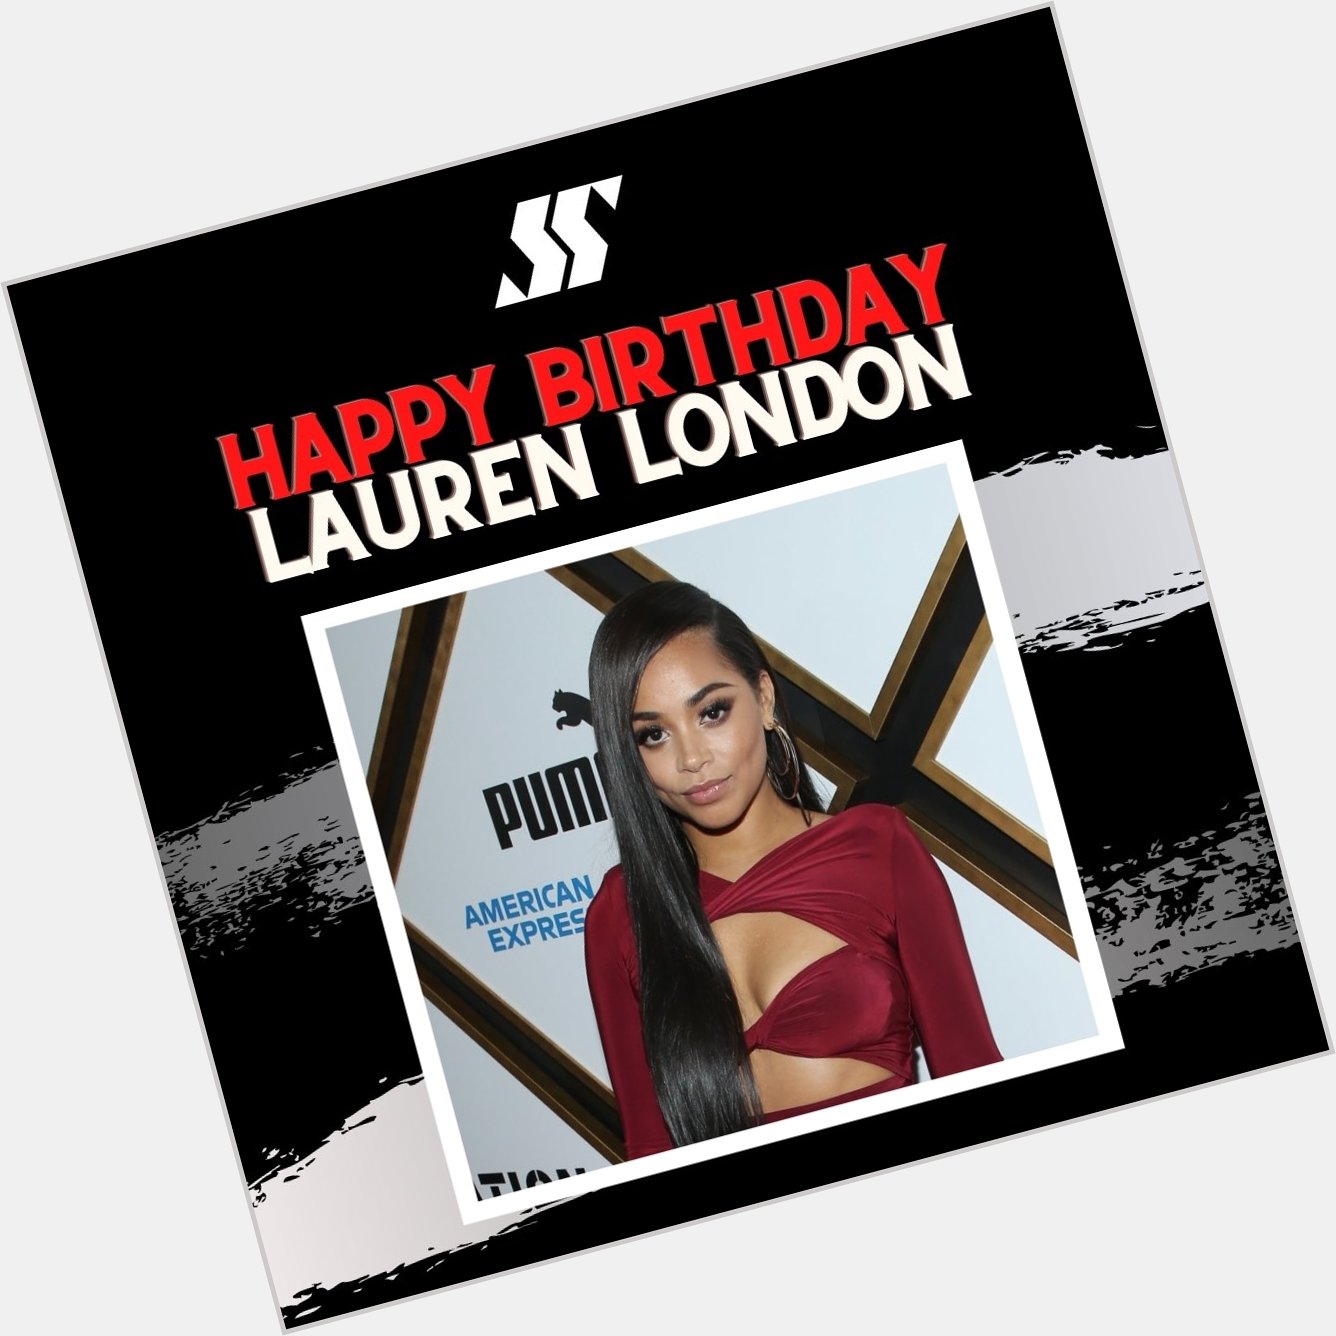 Happy birthday Lauren London   